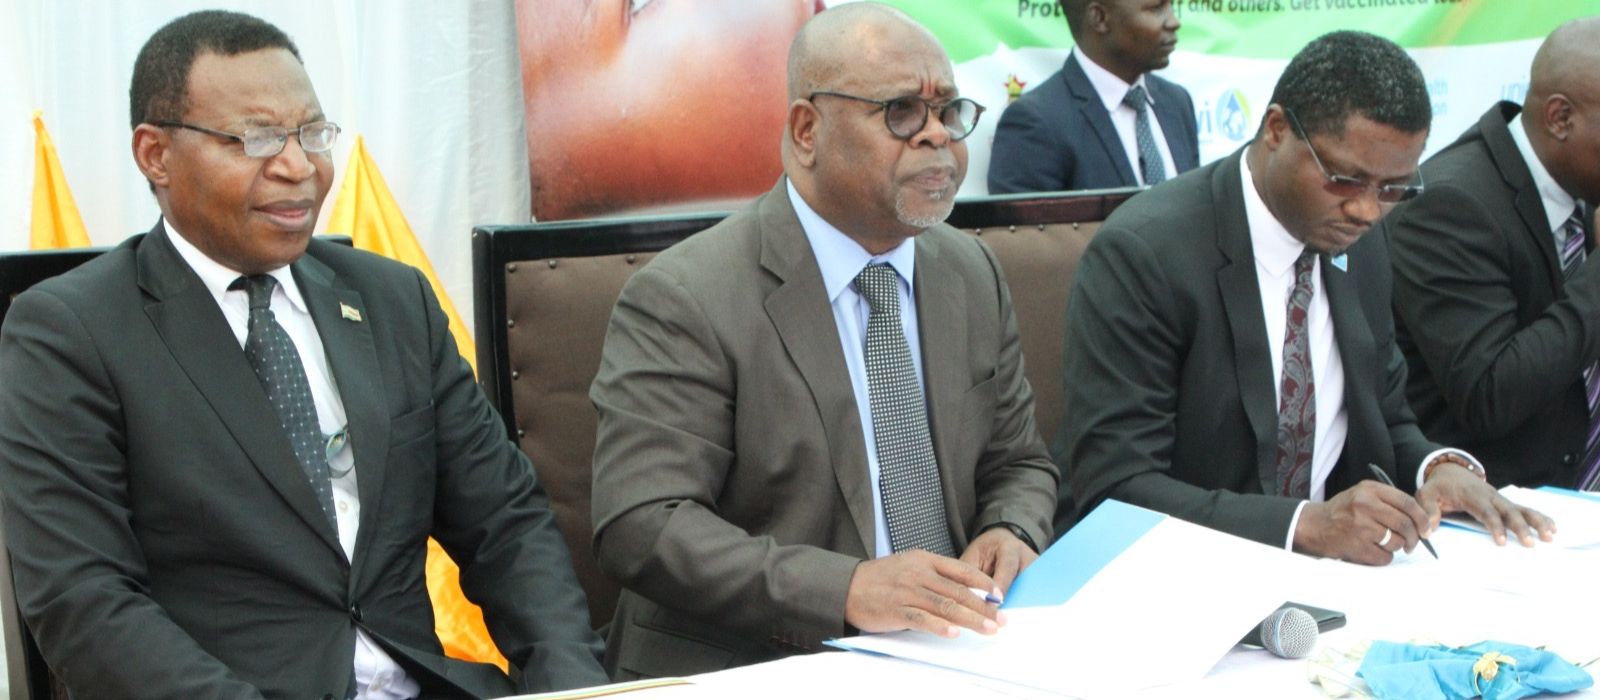 Zim launches cholera vaccination campaign